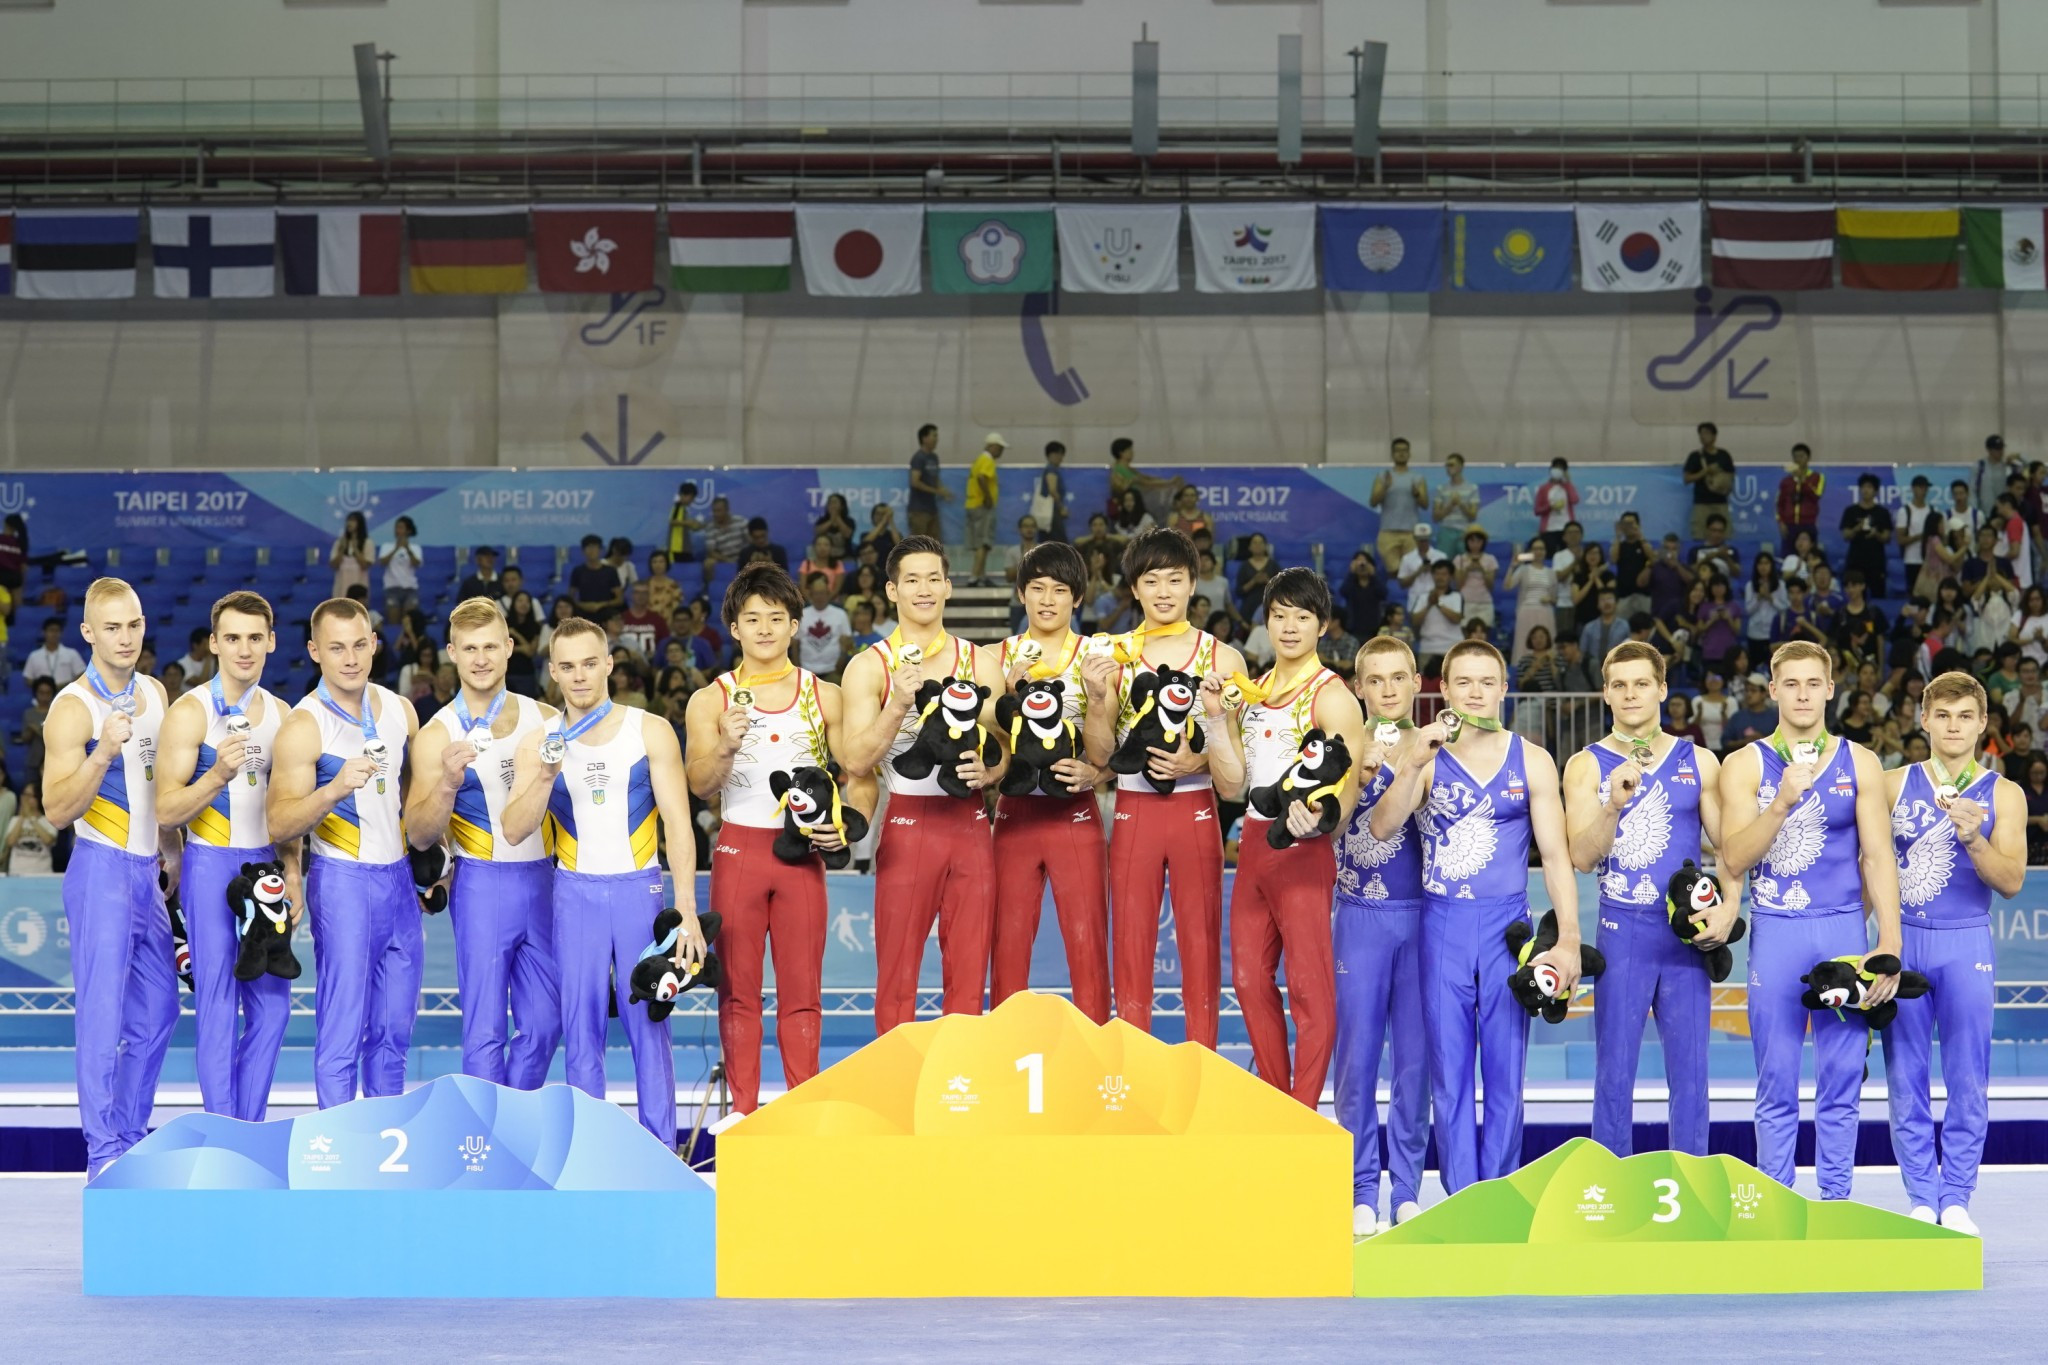 Japan beat the Ukraine to men's team gymnastics gold ©Taipei 2017